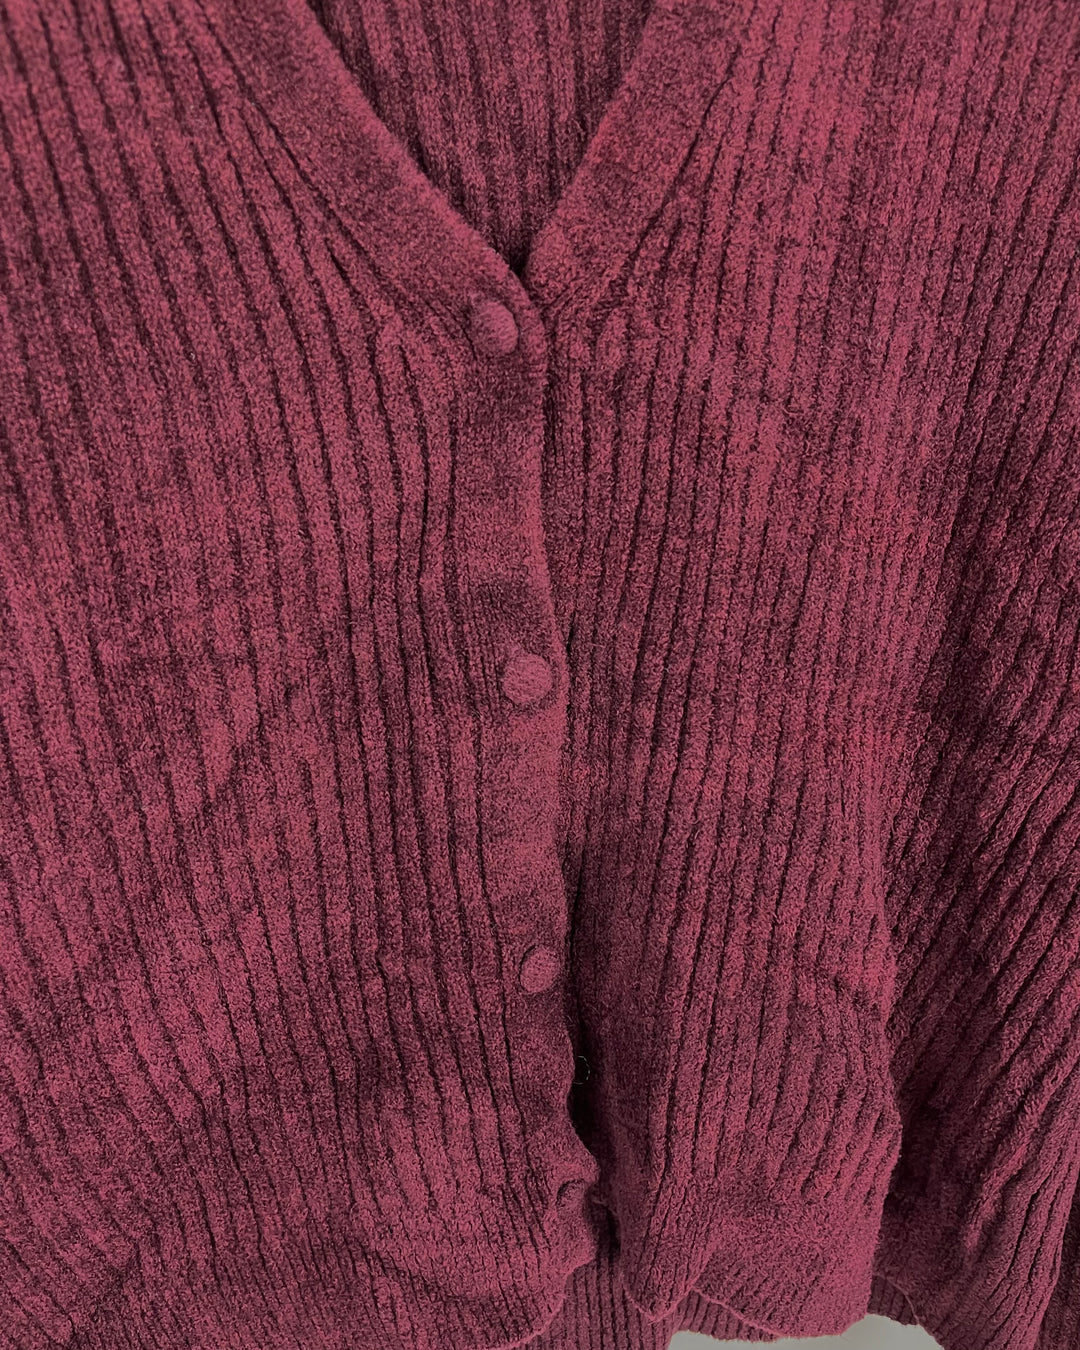 Red Long Sleeve Cardigan - Medium